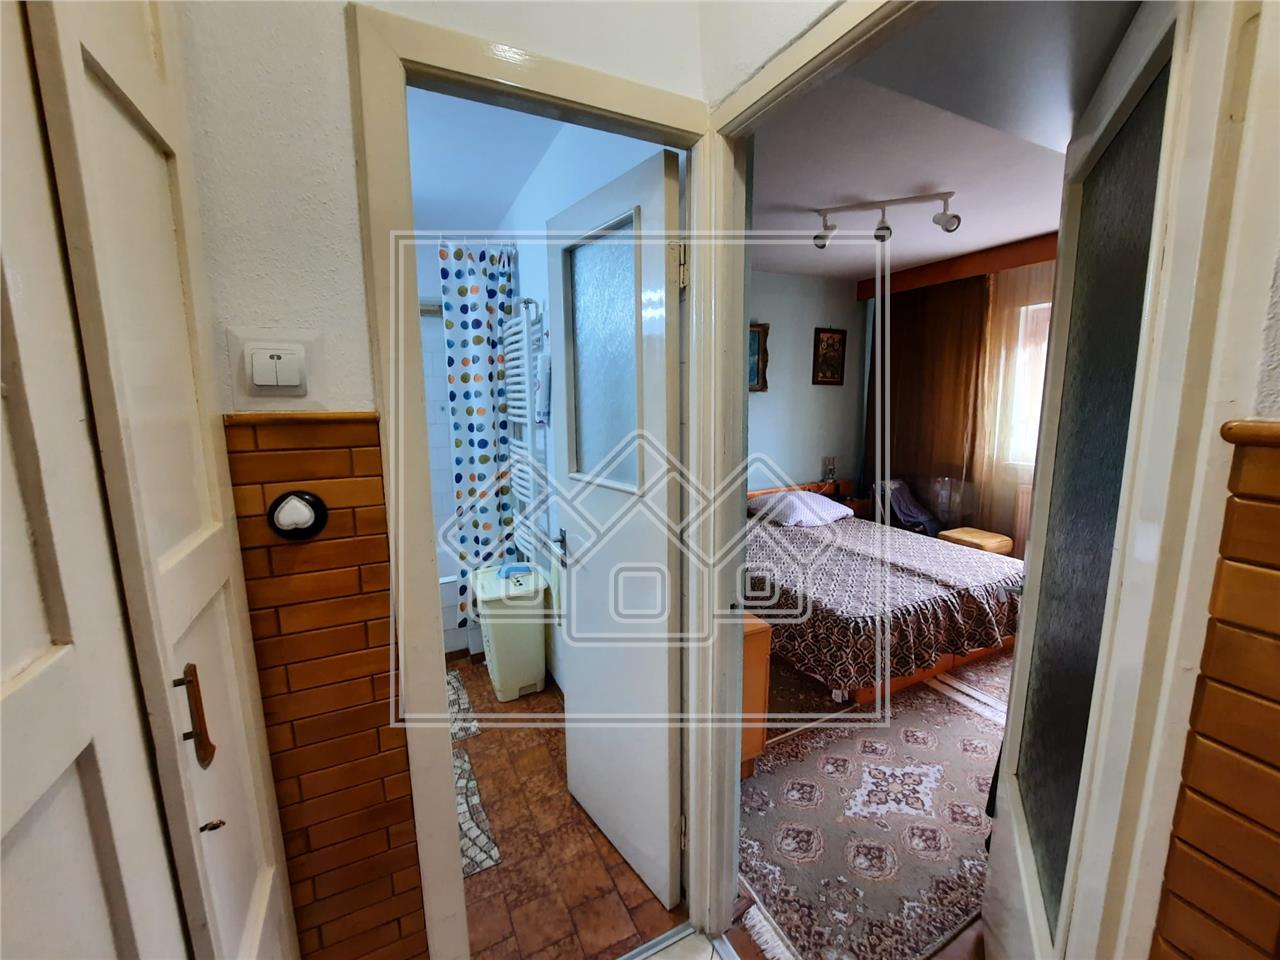 Apartament de vanzare in Sibiu - 3 camere, 2 bai - Scoala de Inot